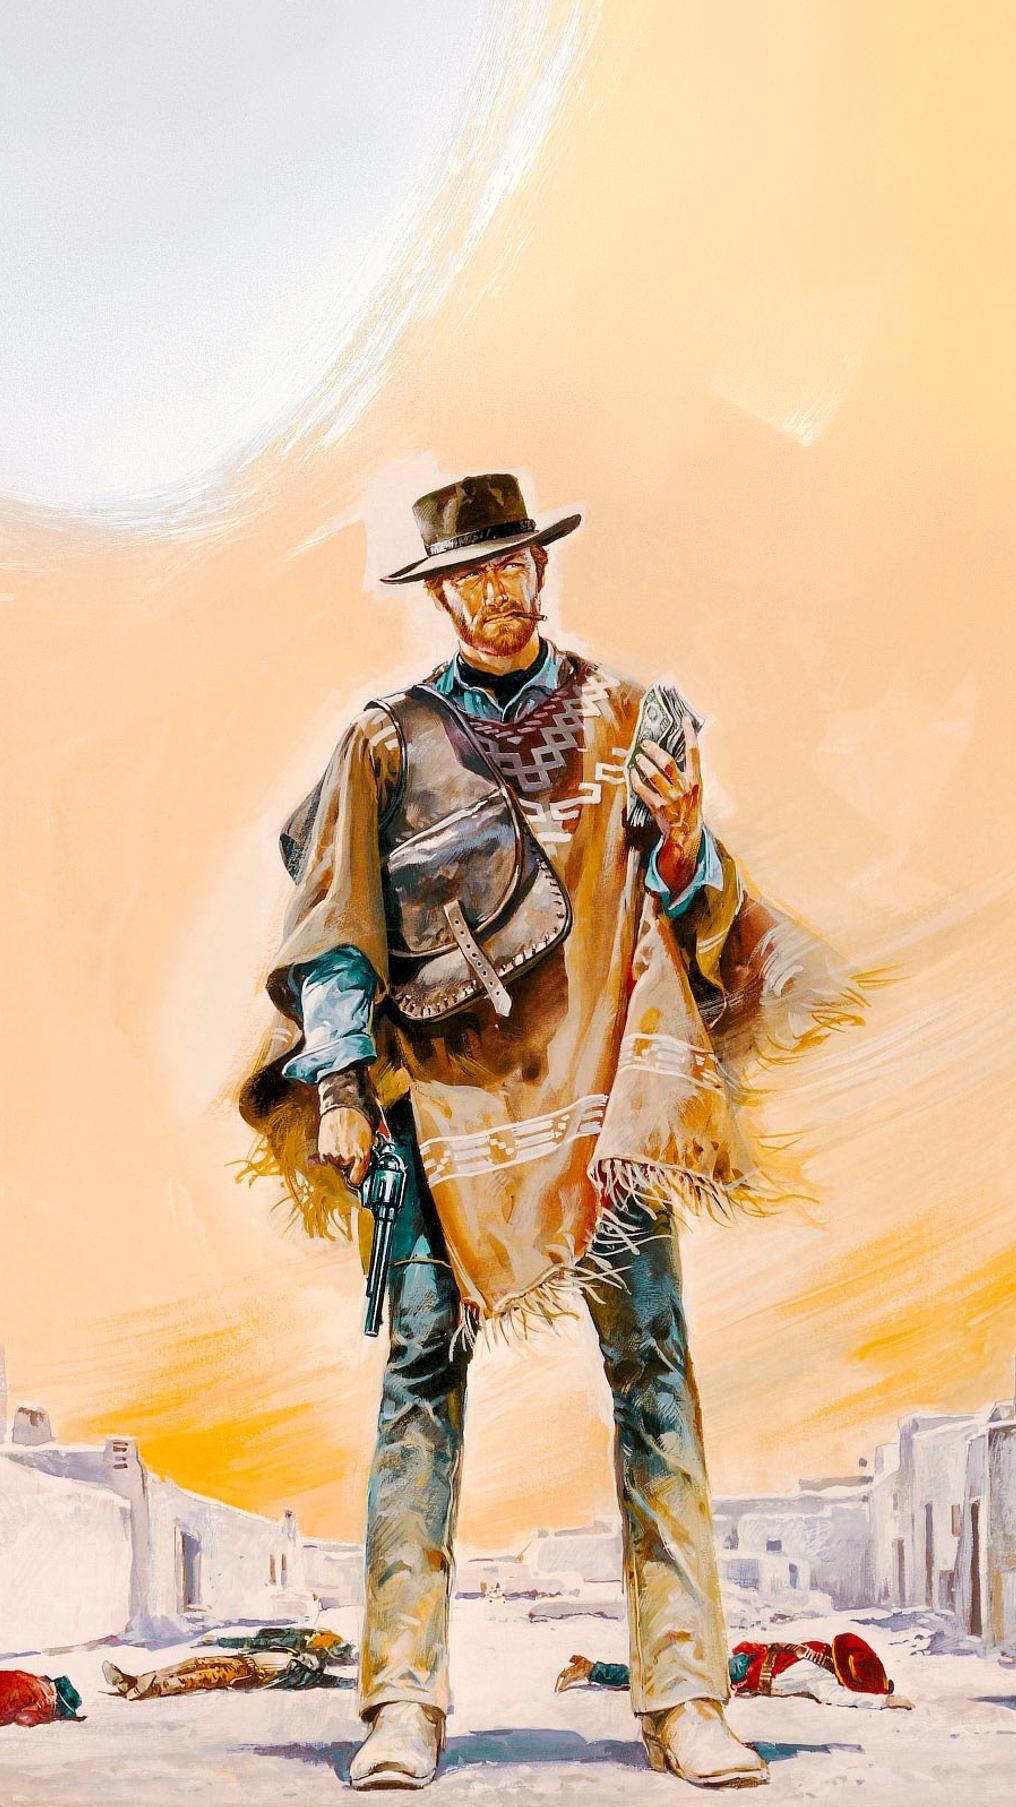 Western Ranch Wallpapers  Desert Aesthetic Wallpaper for iPhone